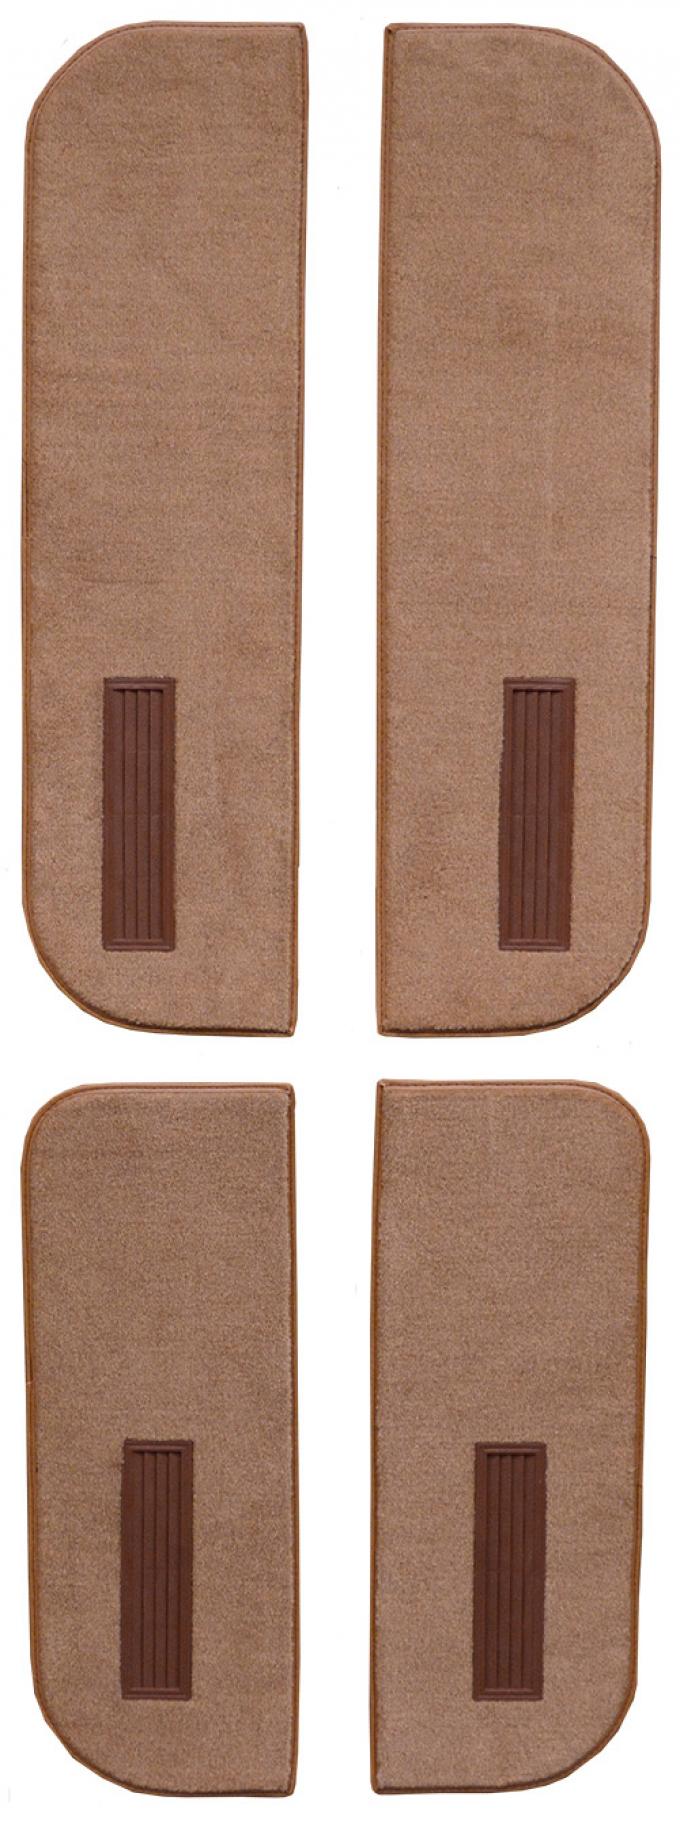 ACC 1979-1980 GMC K2500 Suburban Door Panel Inserts on Cardboard w/Vents 4pc Cutpile Carpet